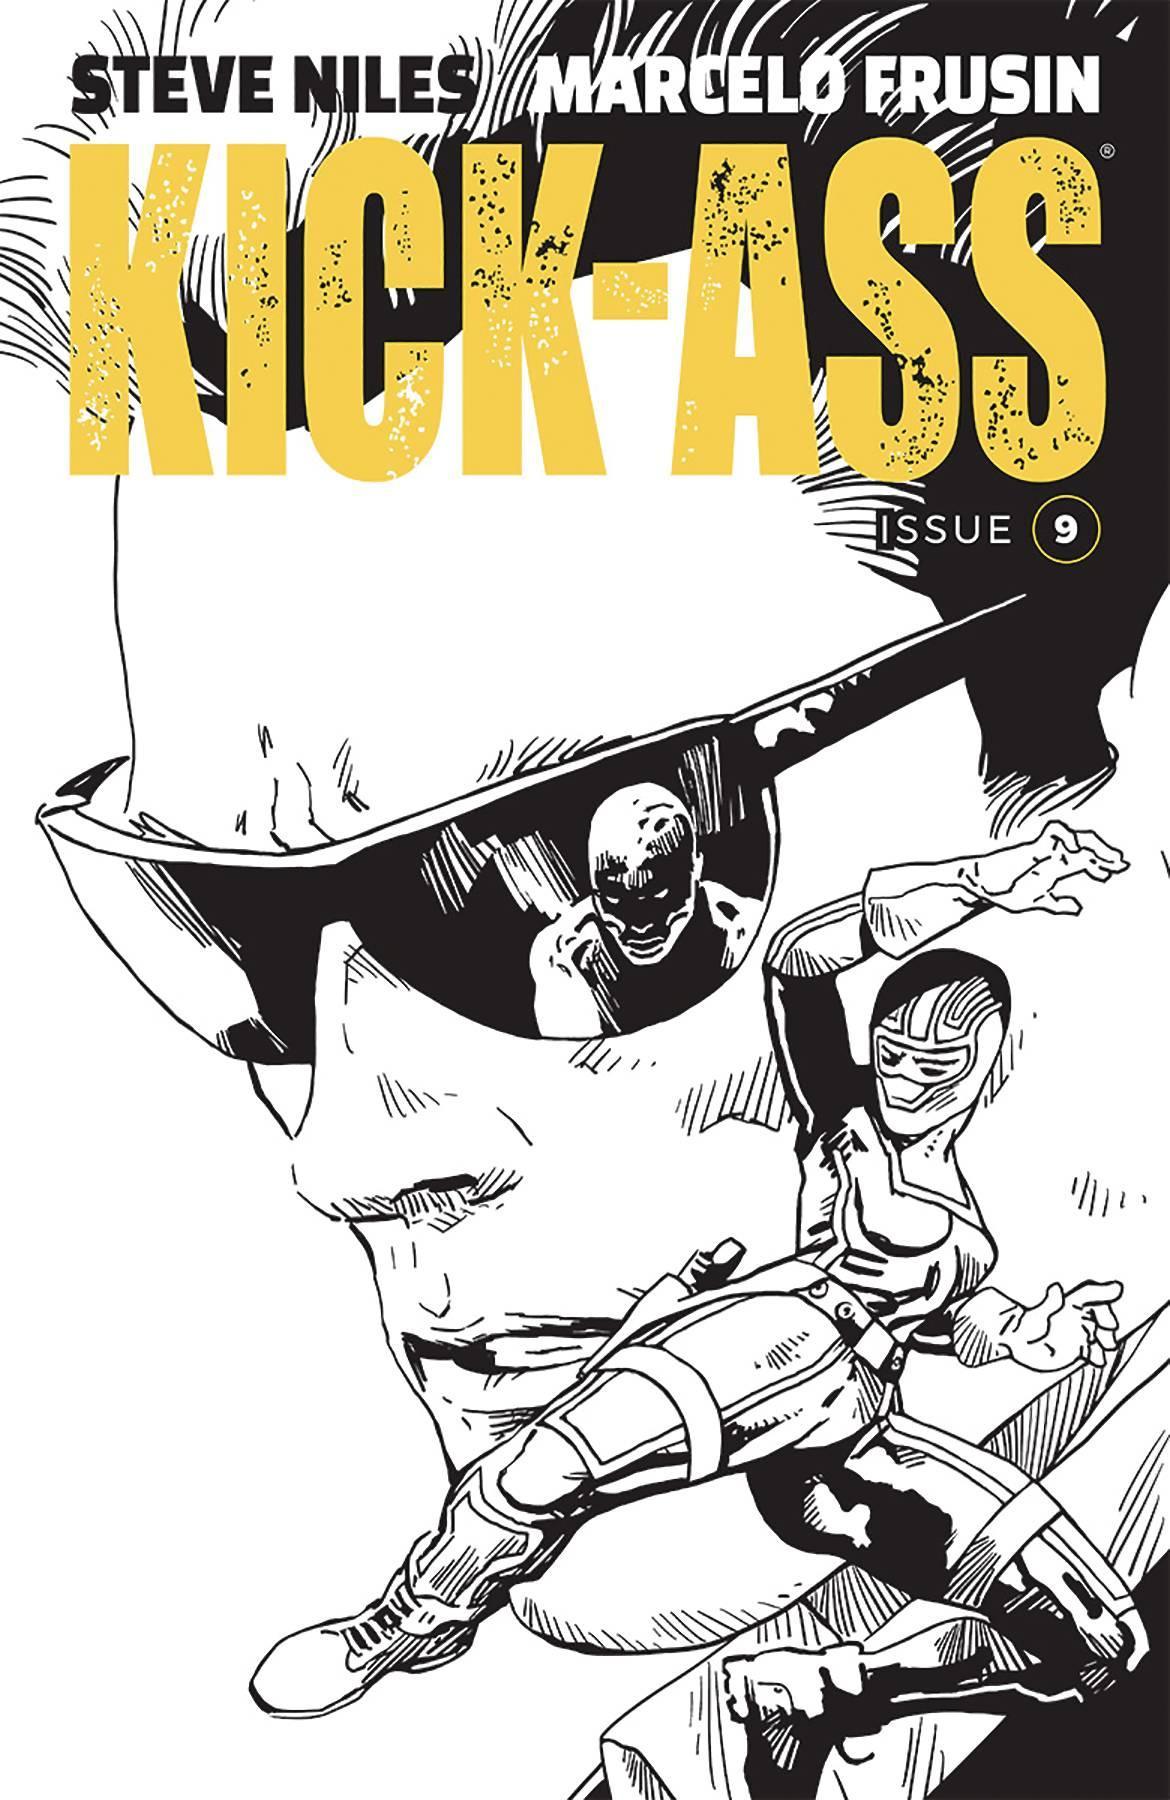 KICK-ASS VOL 4 #9 CVR B FRUSIN - Kings Comics